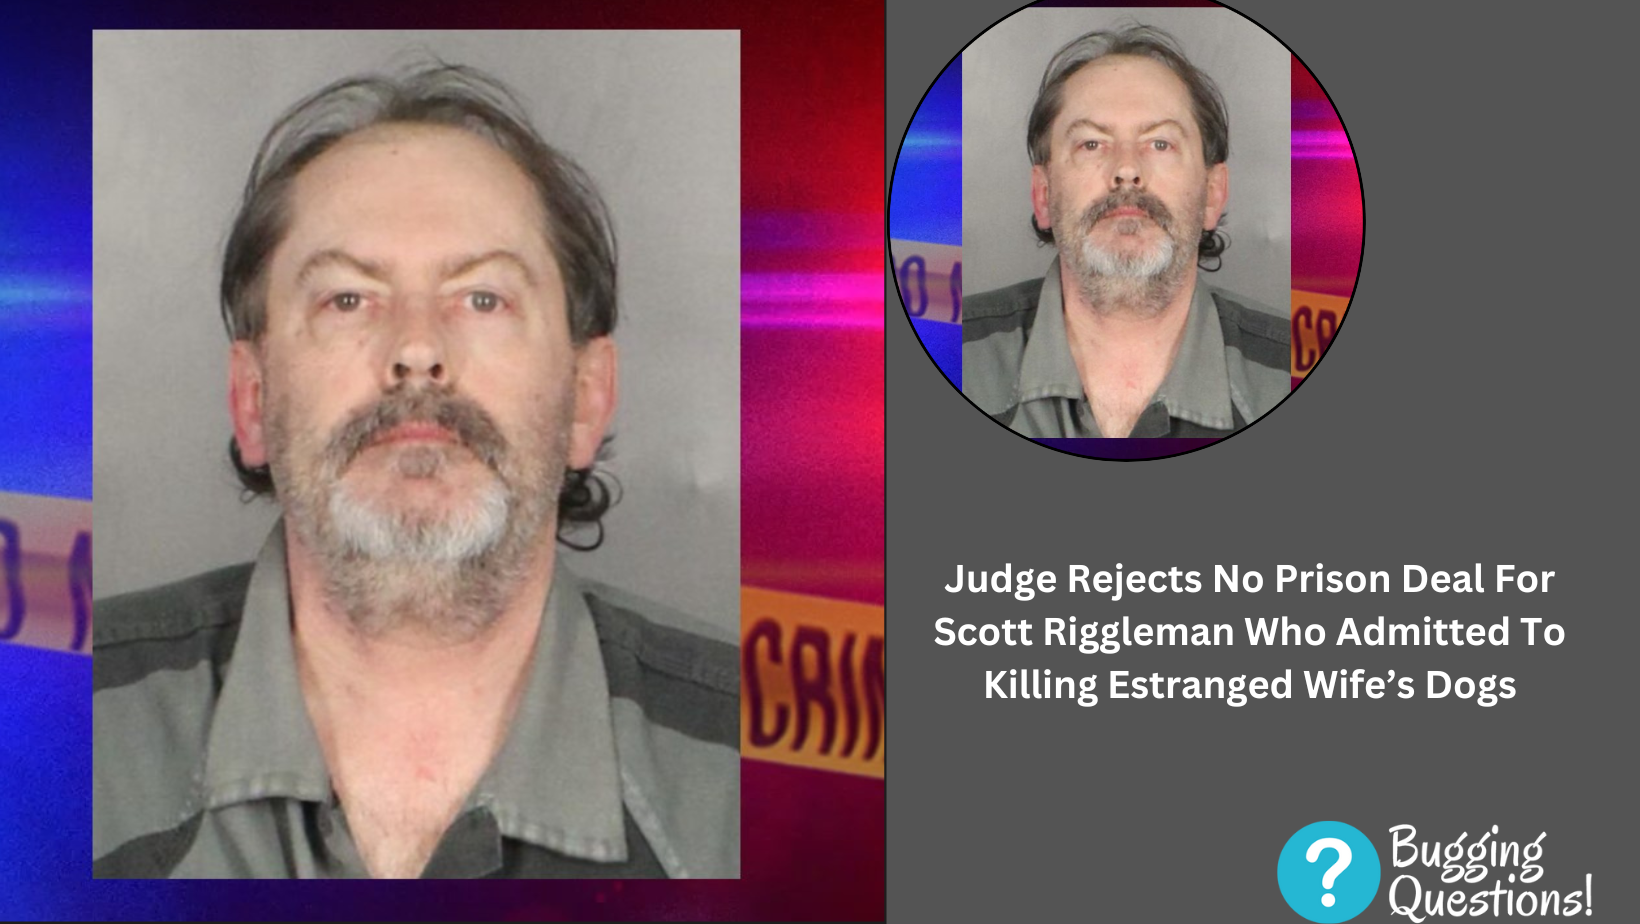 Scott Riggleman Trial And Case Update